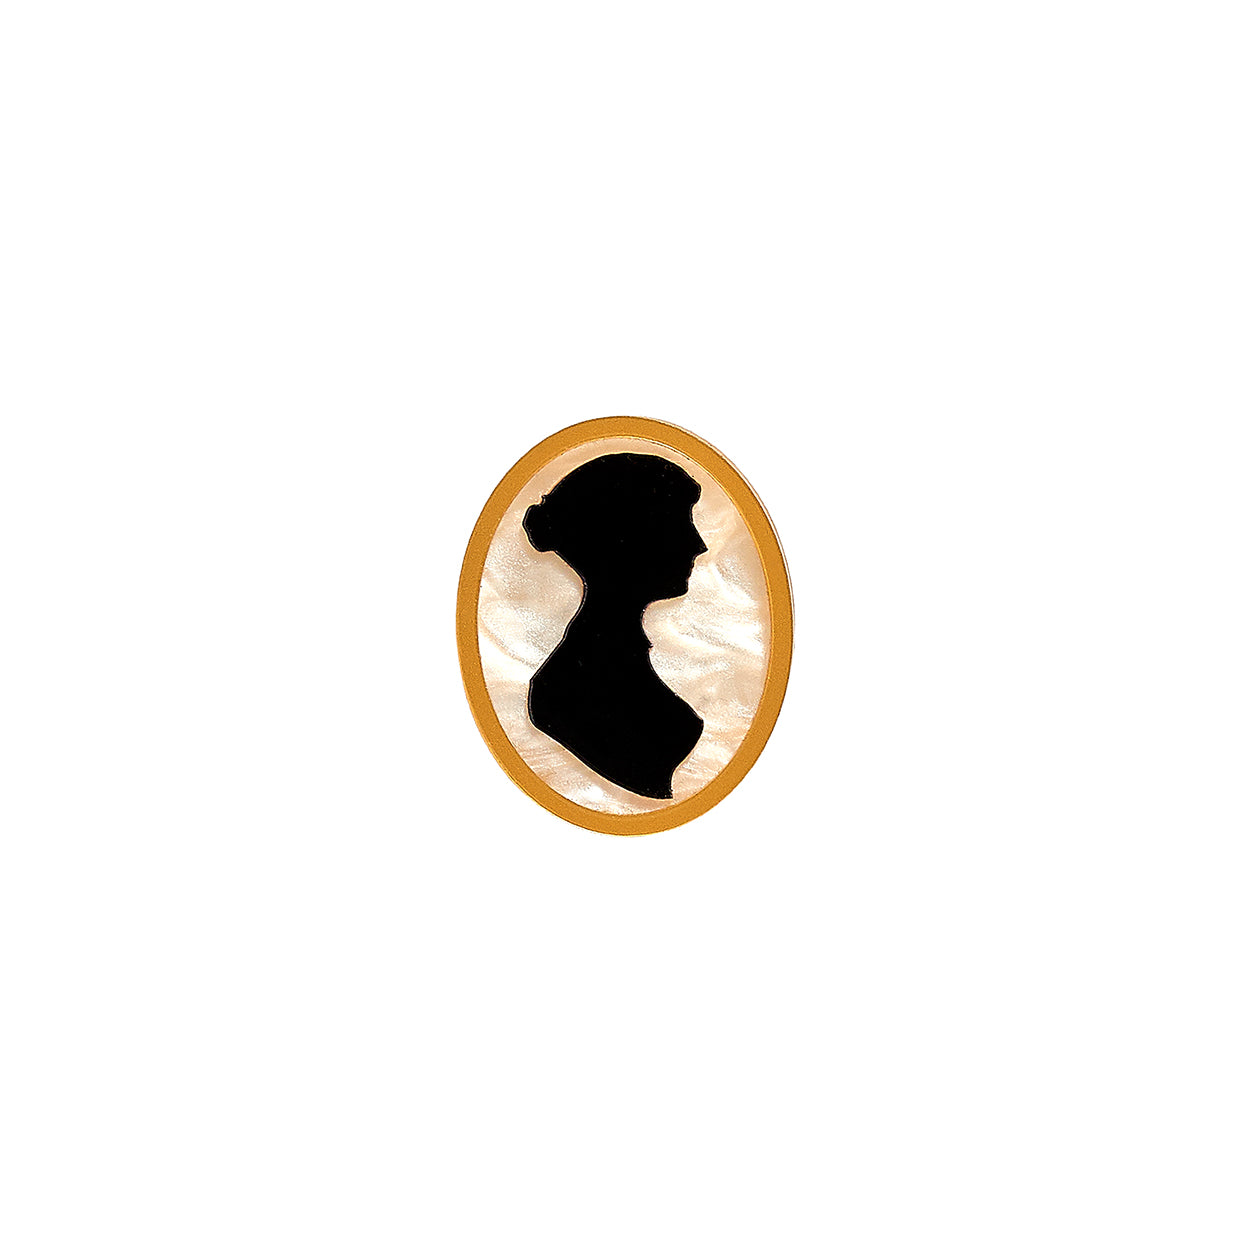 Jane Austen Cameo Brooch